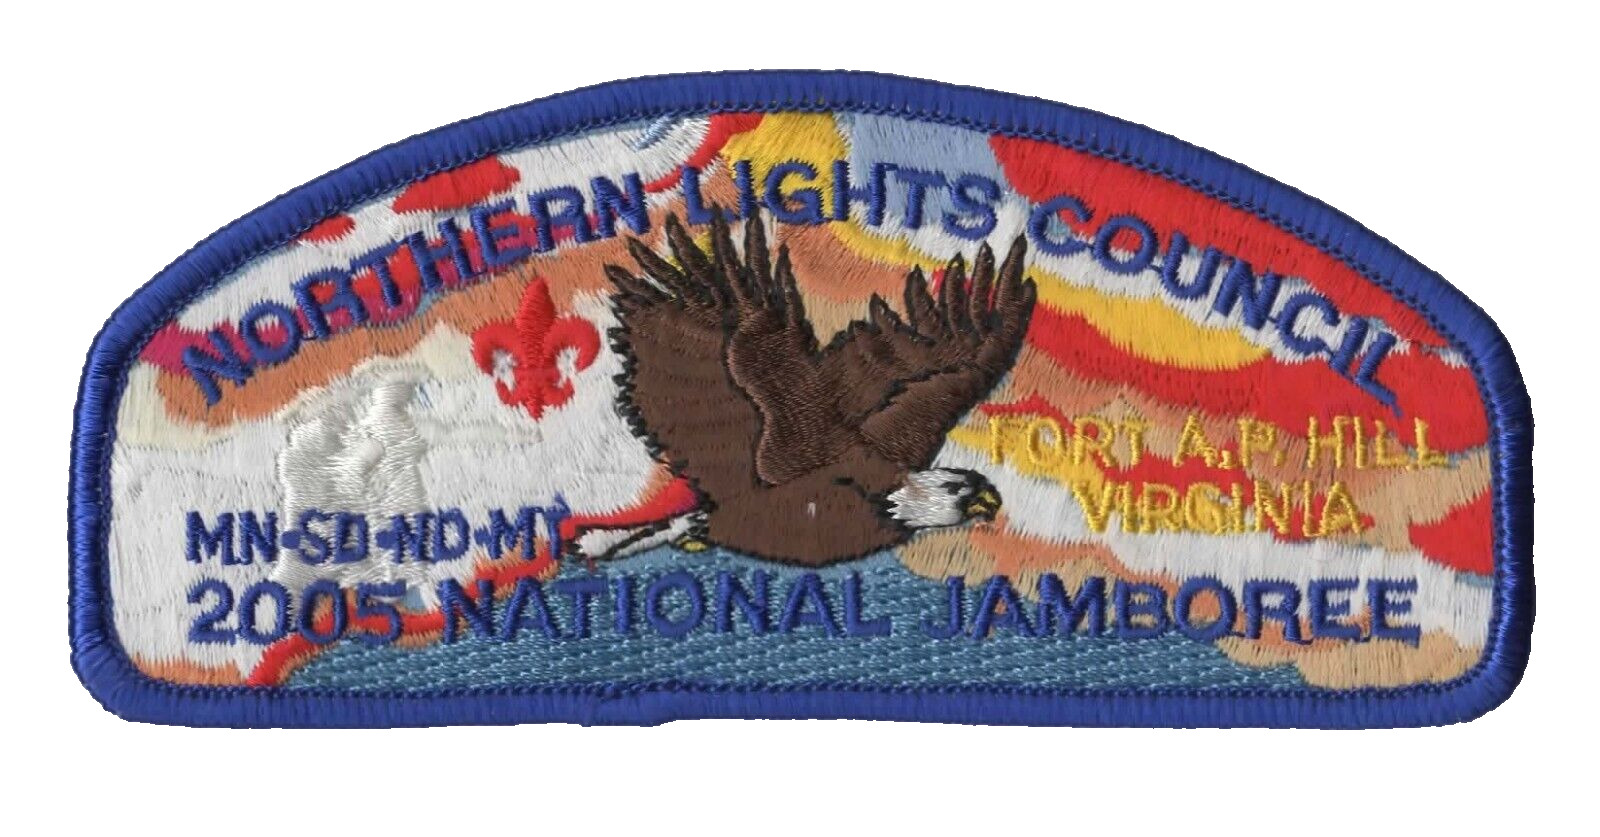 2005 National Jamboree Northern Lights Council JSP